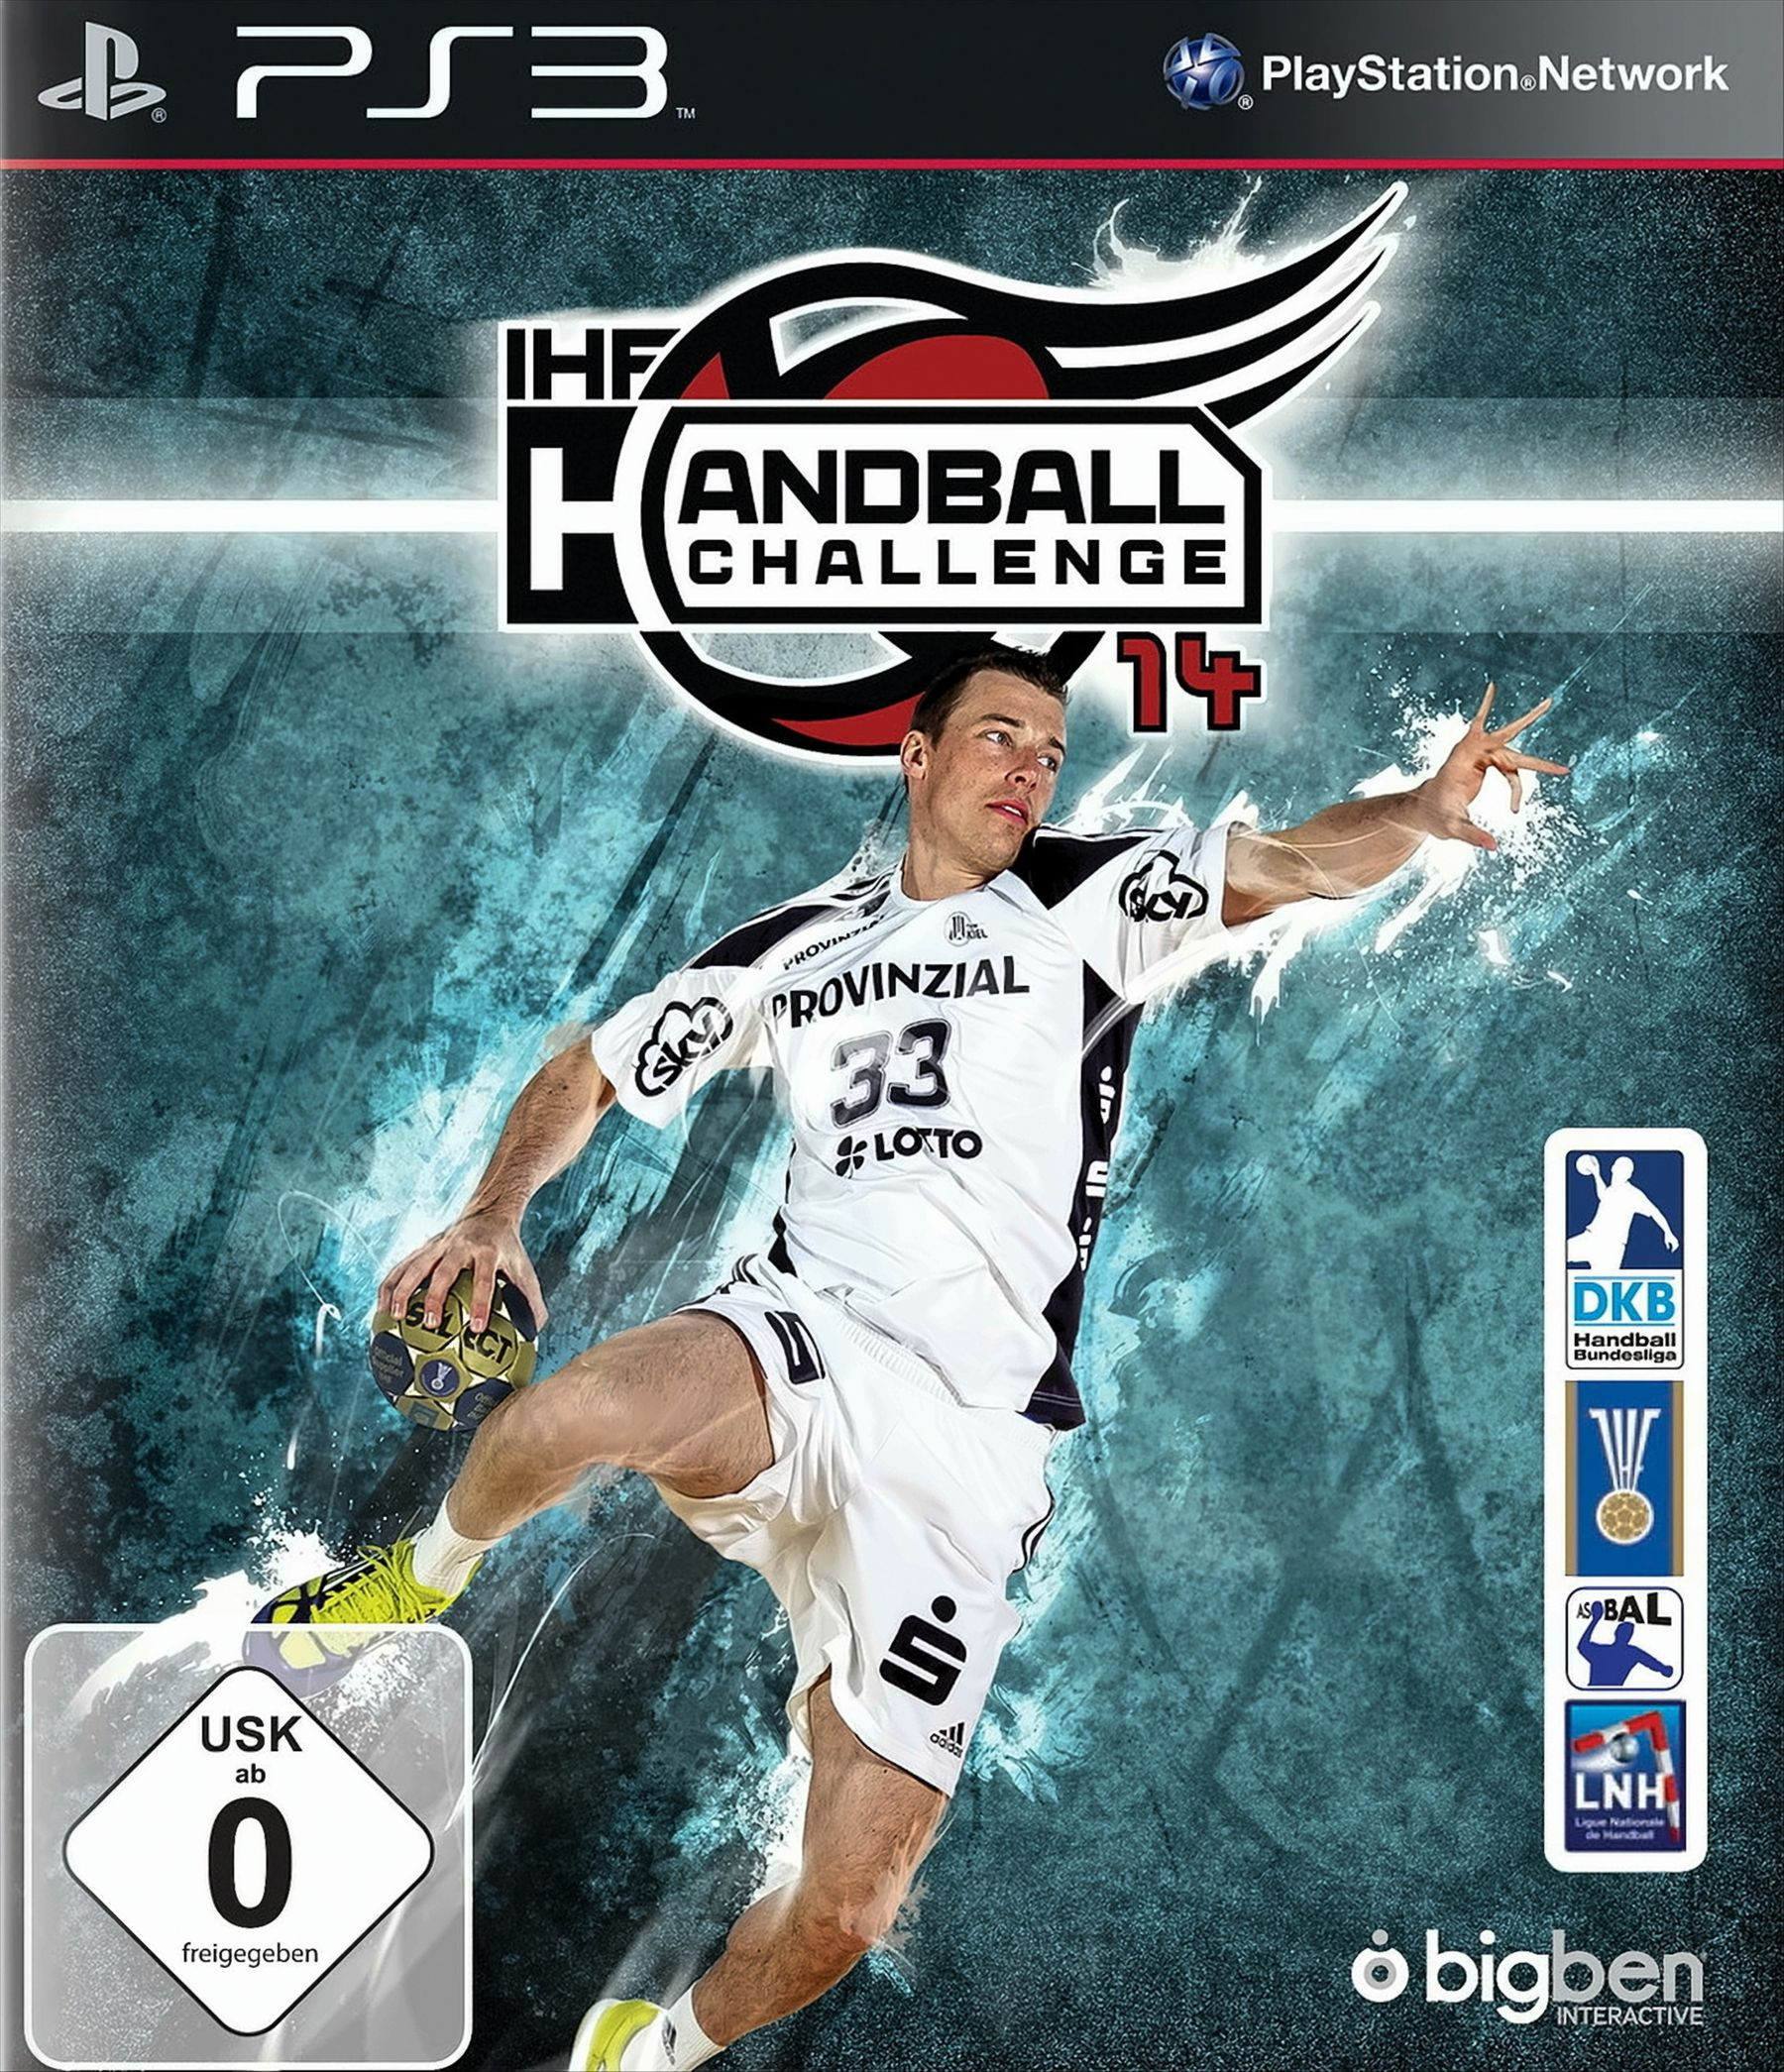 PS3 3] IHF [PlayStation Challenge 14 Handball -